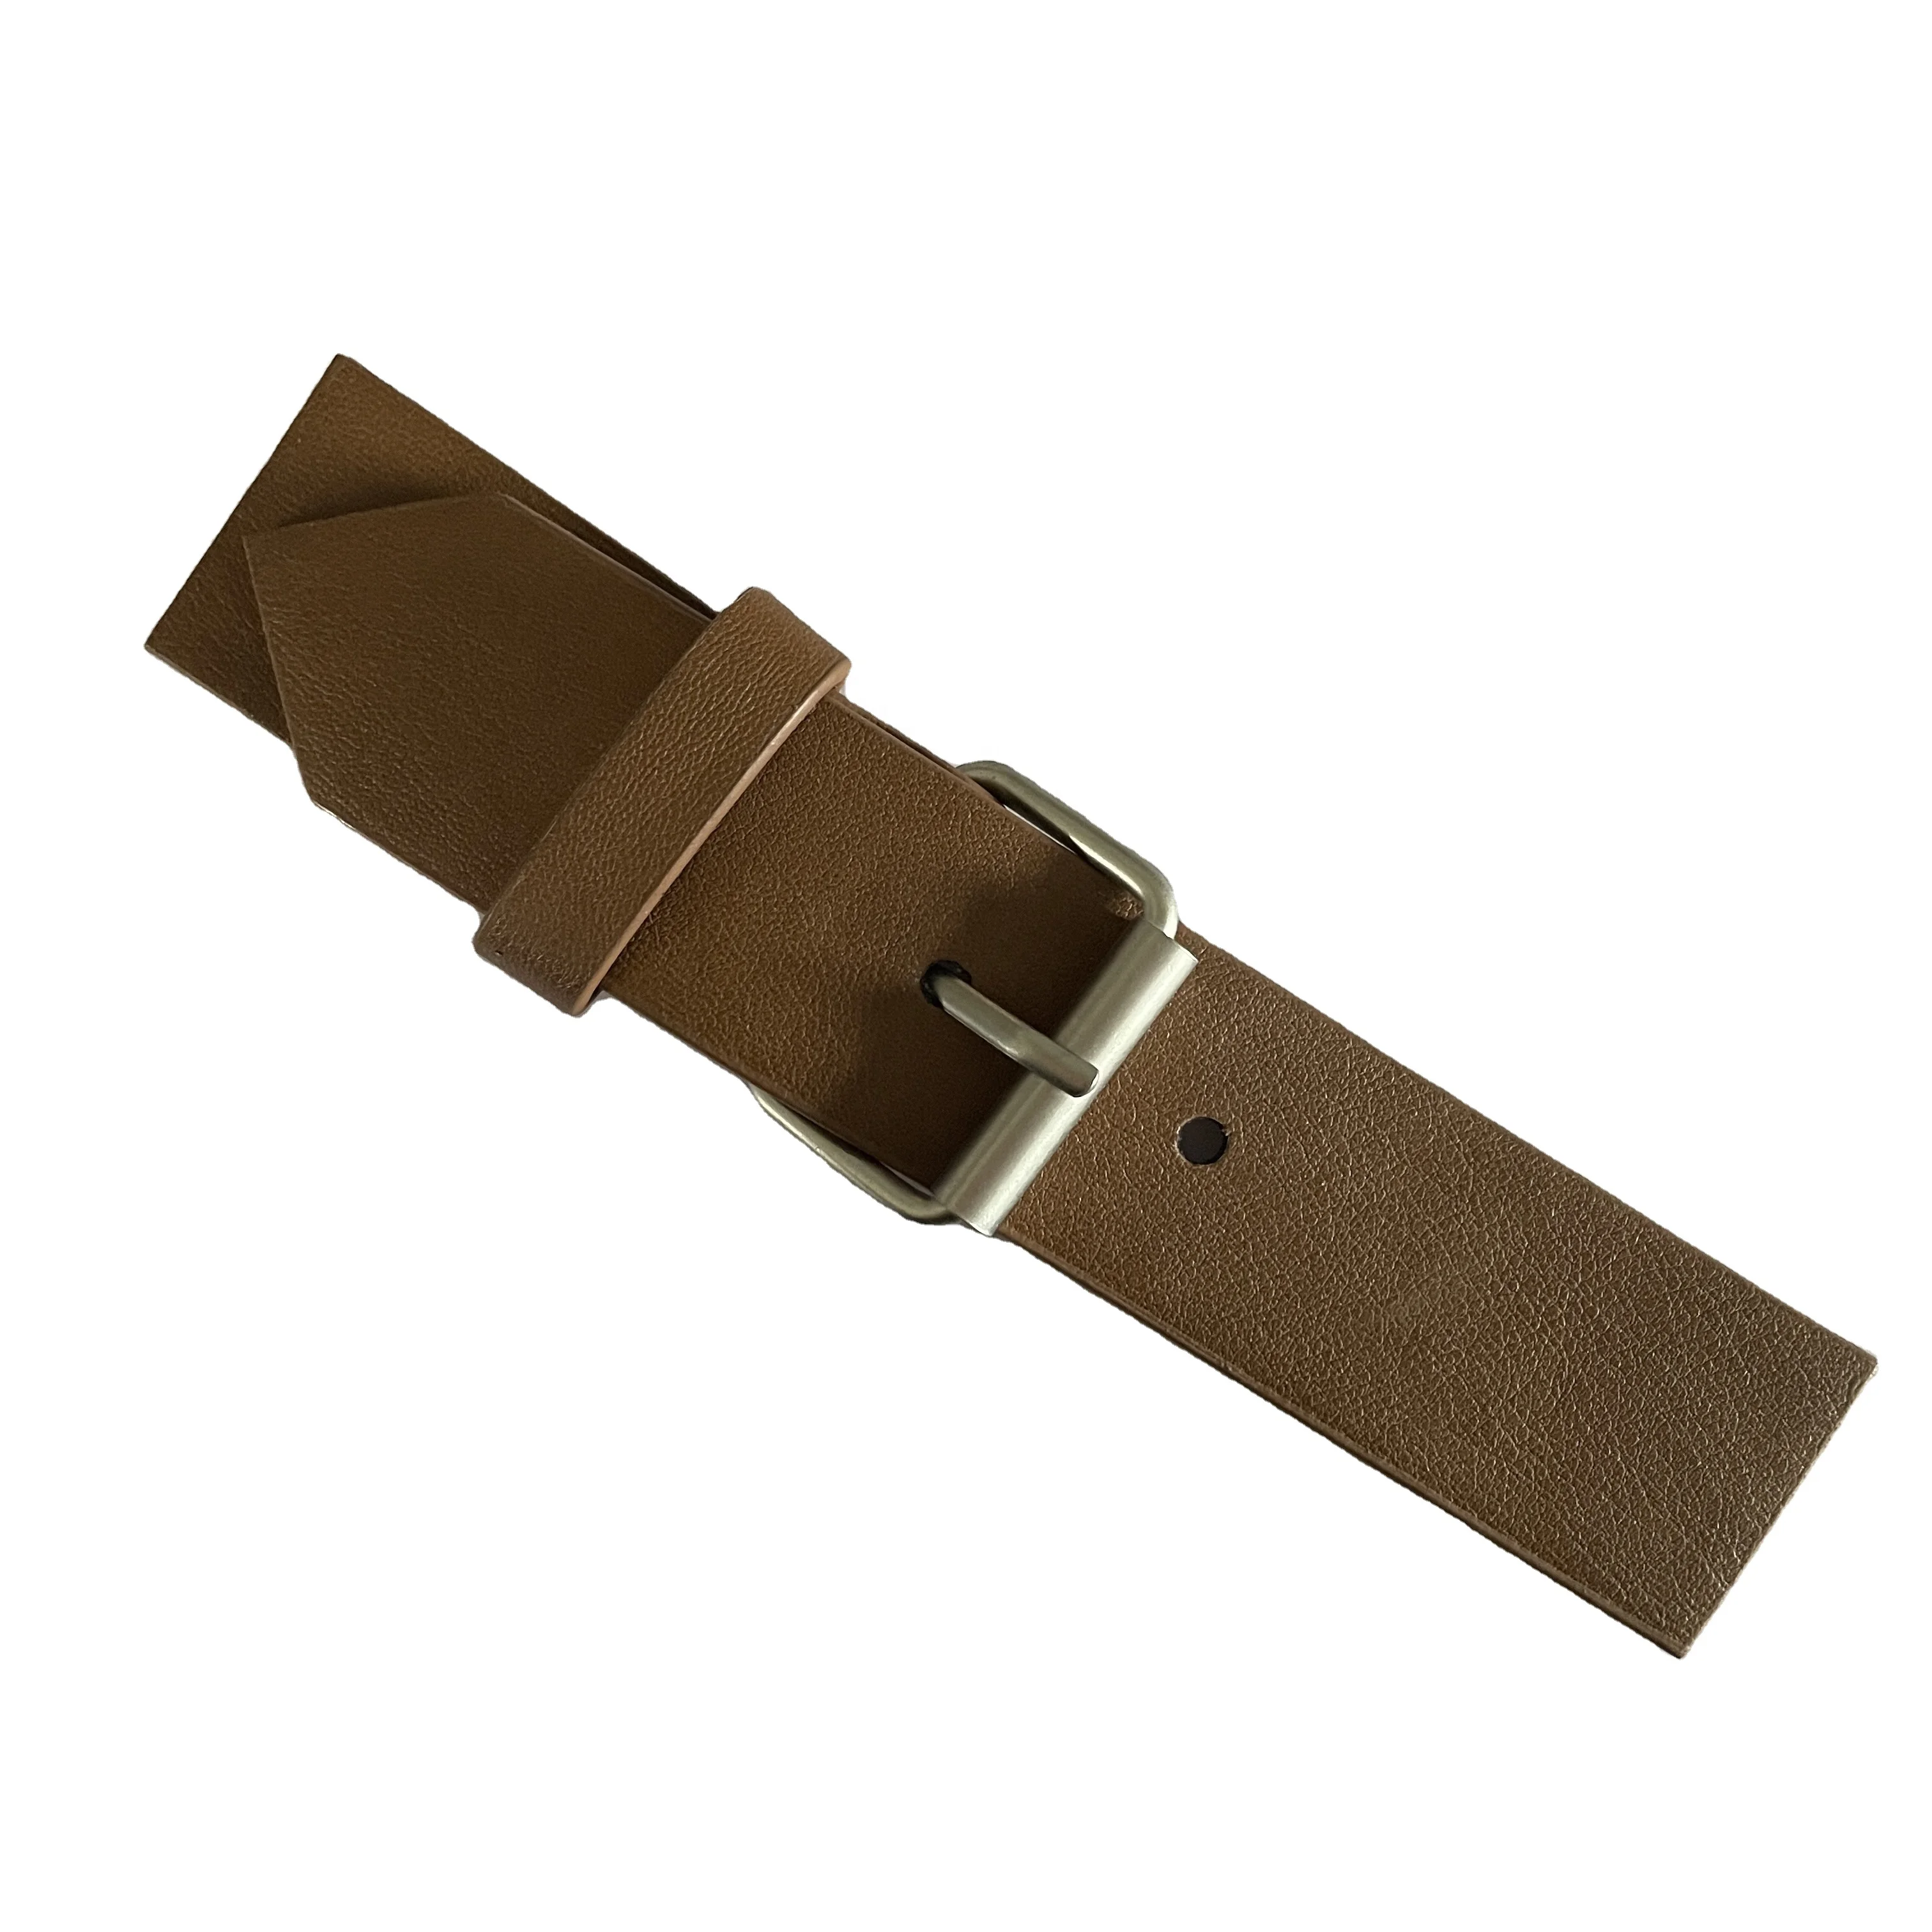 New type custom belt buckles custom belt buckles fashion belt